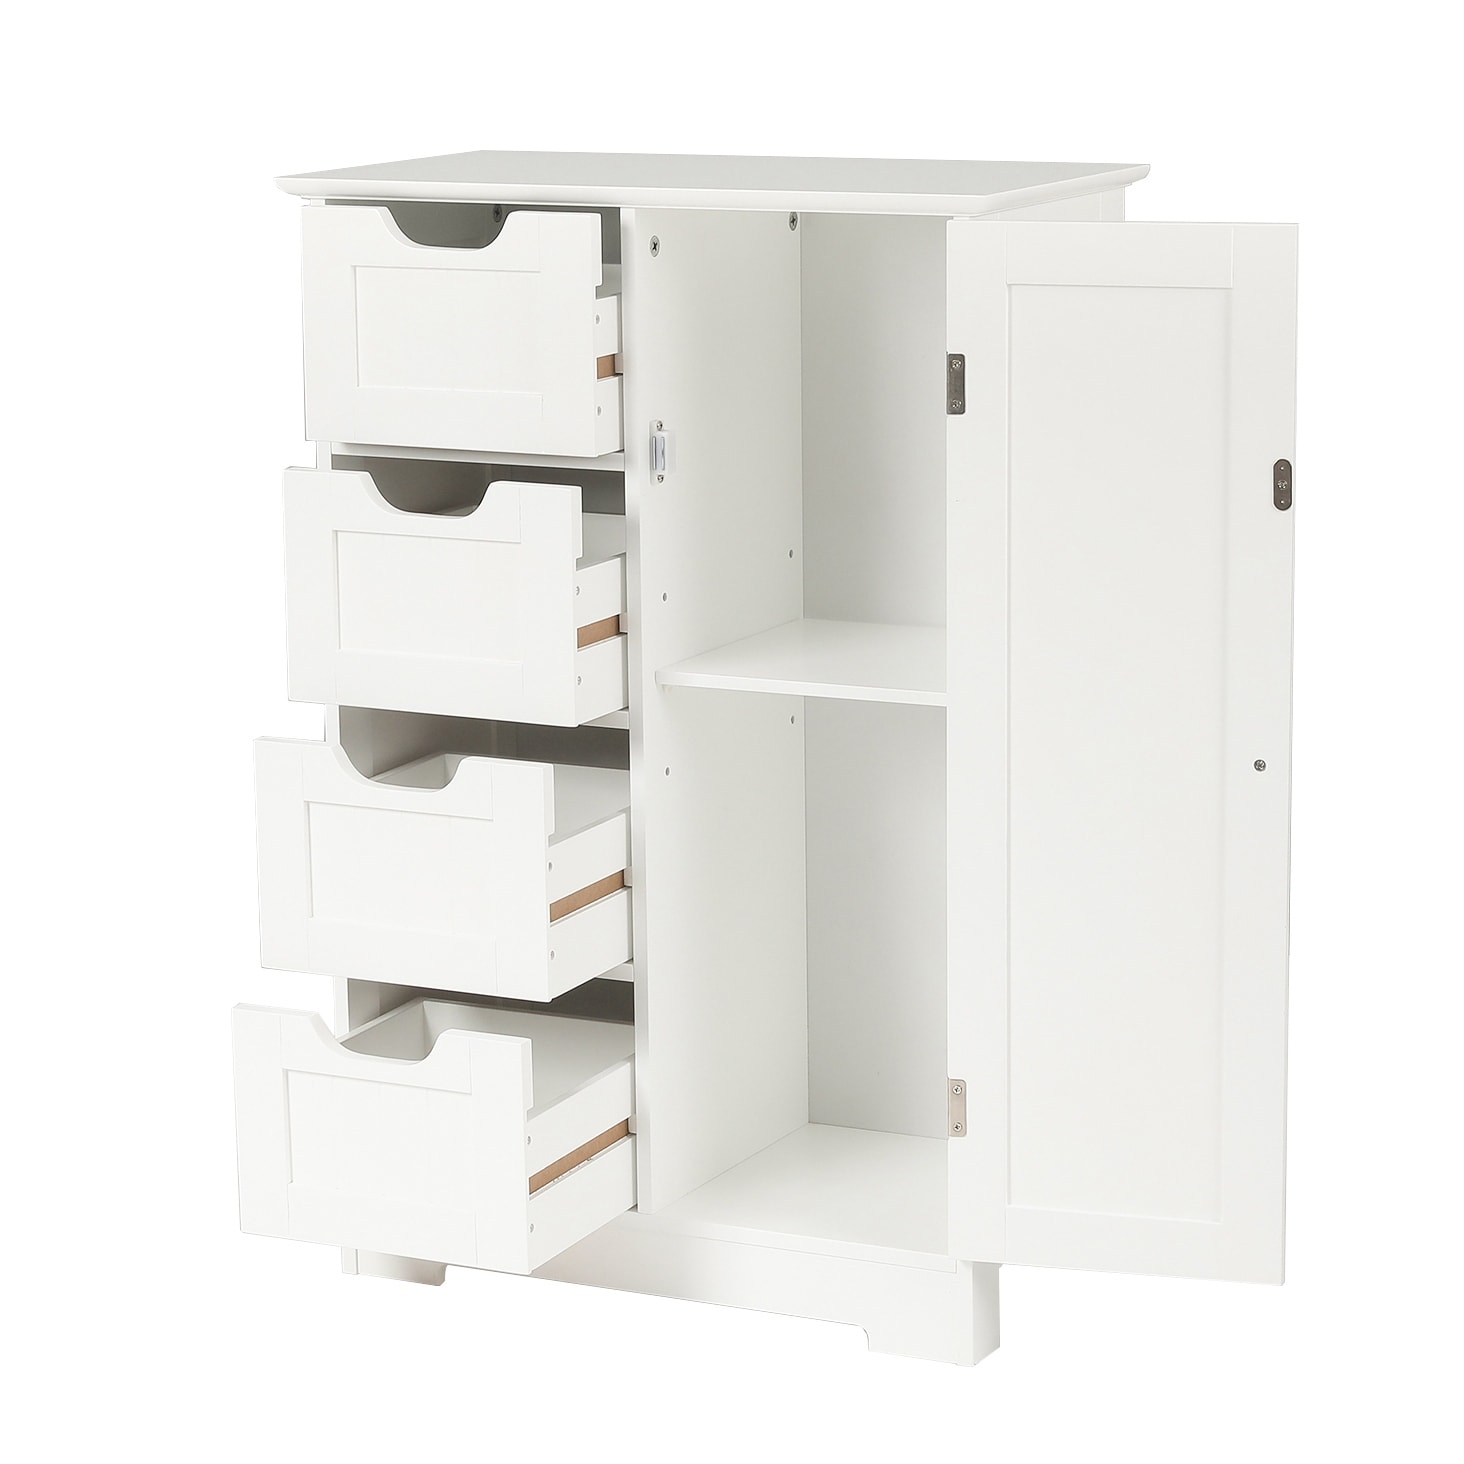 https://ak1.ostkcdn.com/images/products/is/images/direct/7d13f65ed9d0c5af644ec6809f5bb06ae4f3aac1/White-Wood-4-Drawer-1-Door-Bathroom-Storage-Cabinet.jpg